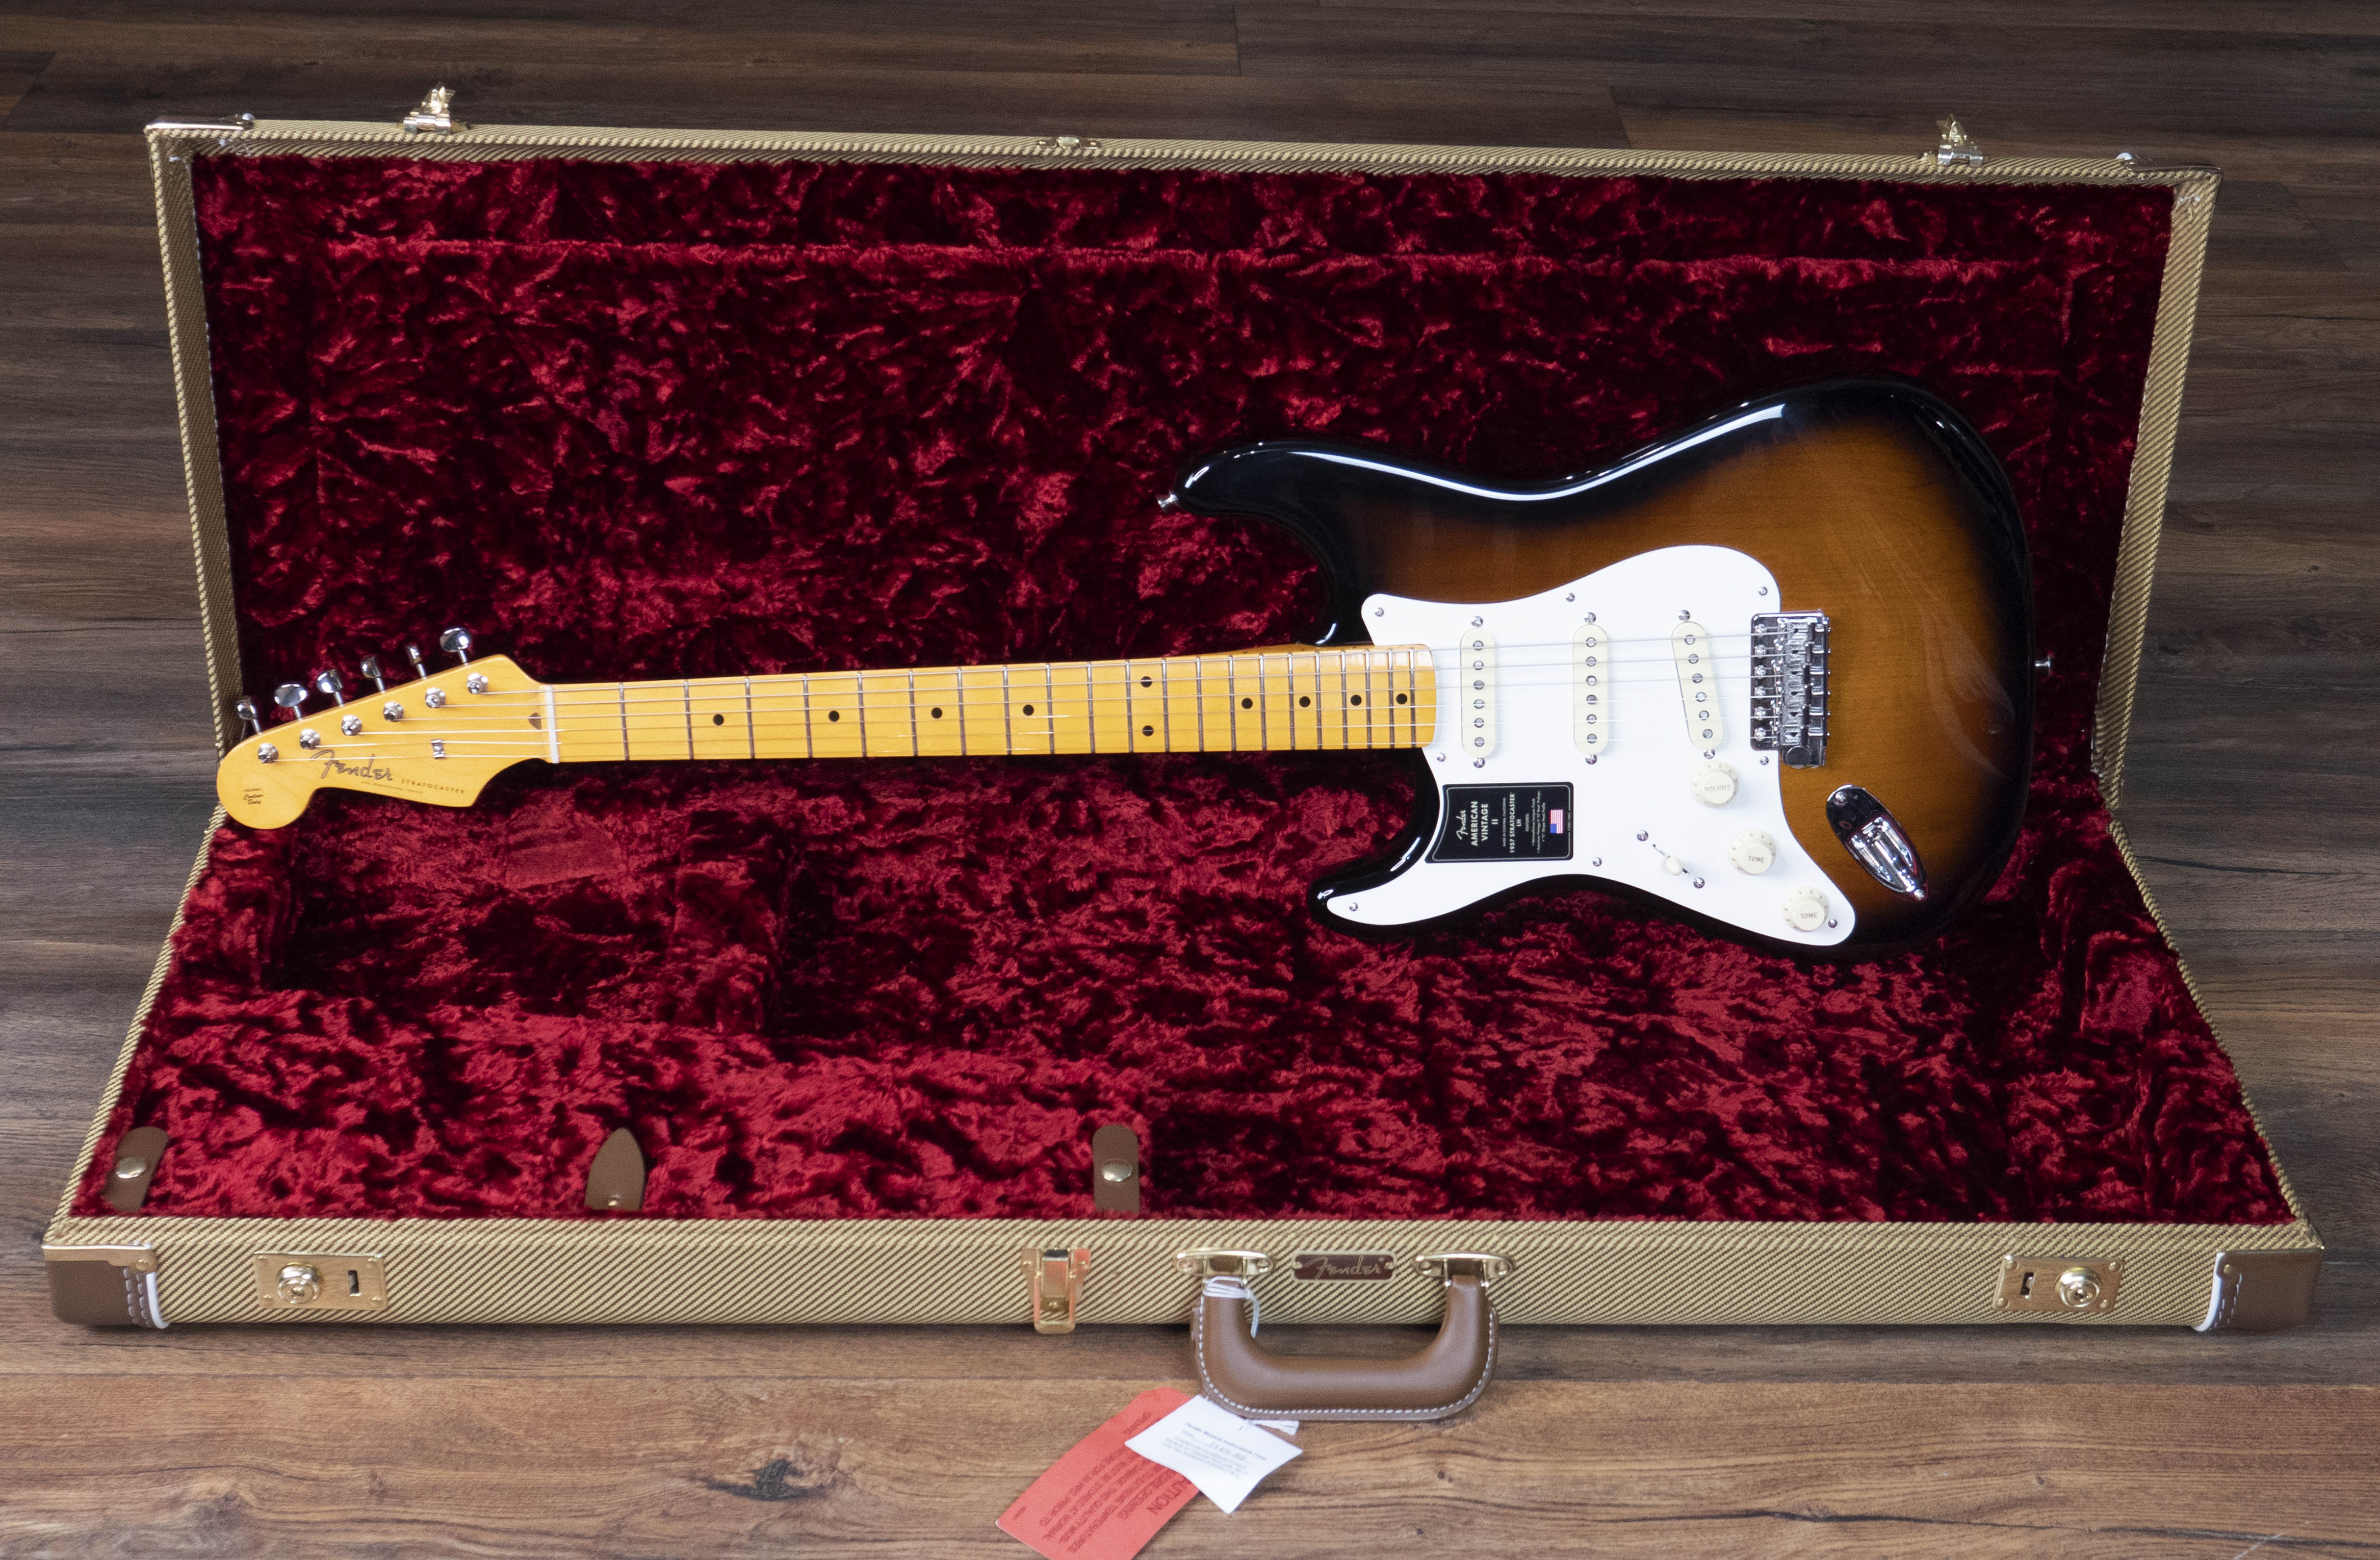 Fender USA Stratocaster Body, LH Mystic Red